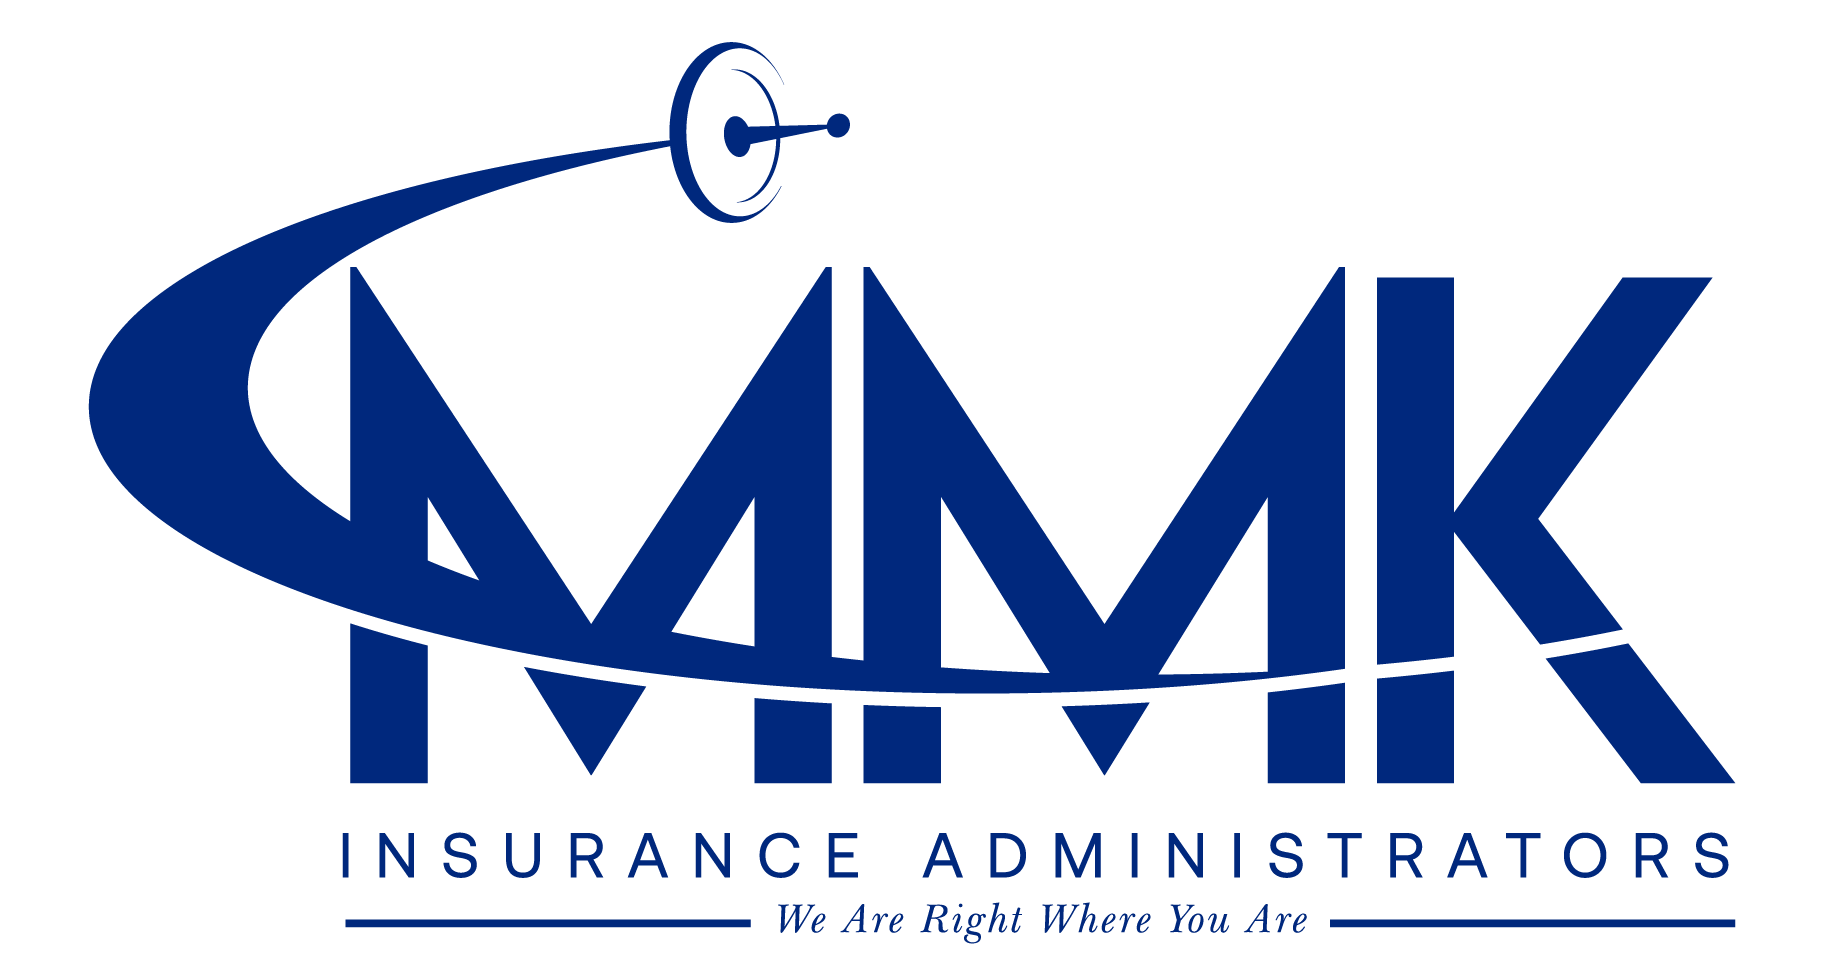 MMK Insurance Administrators